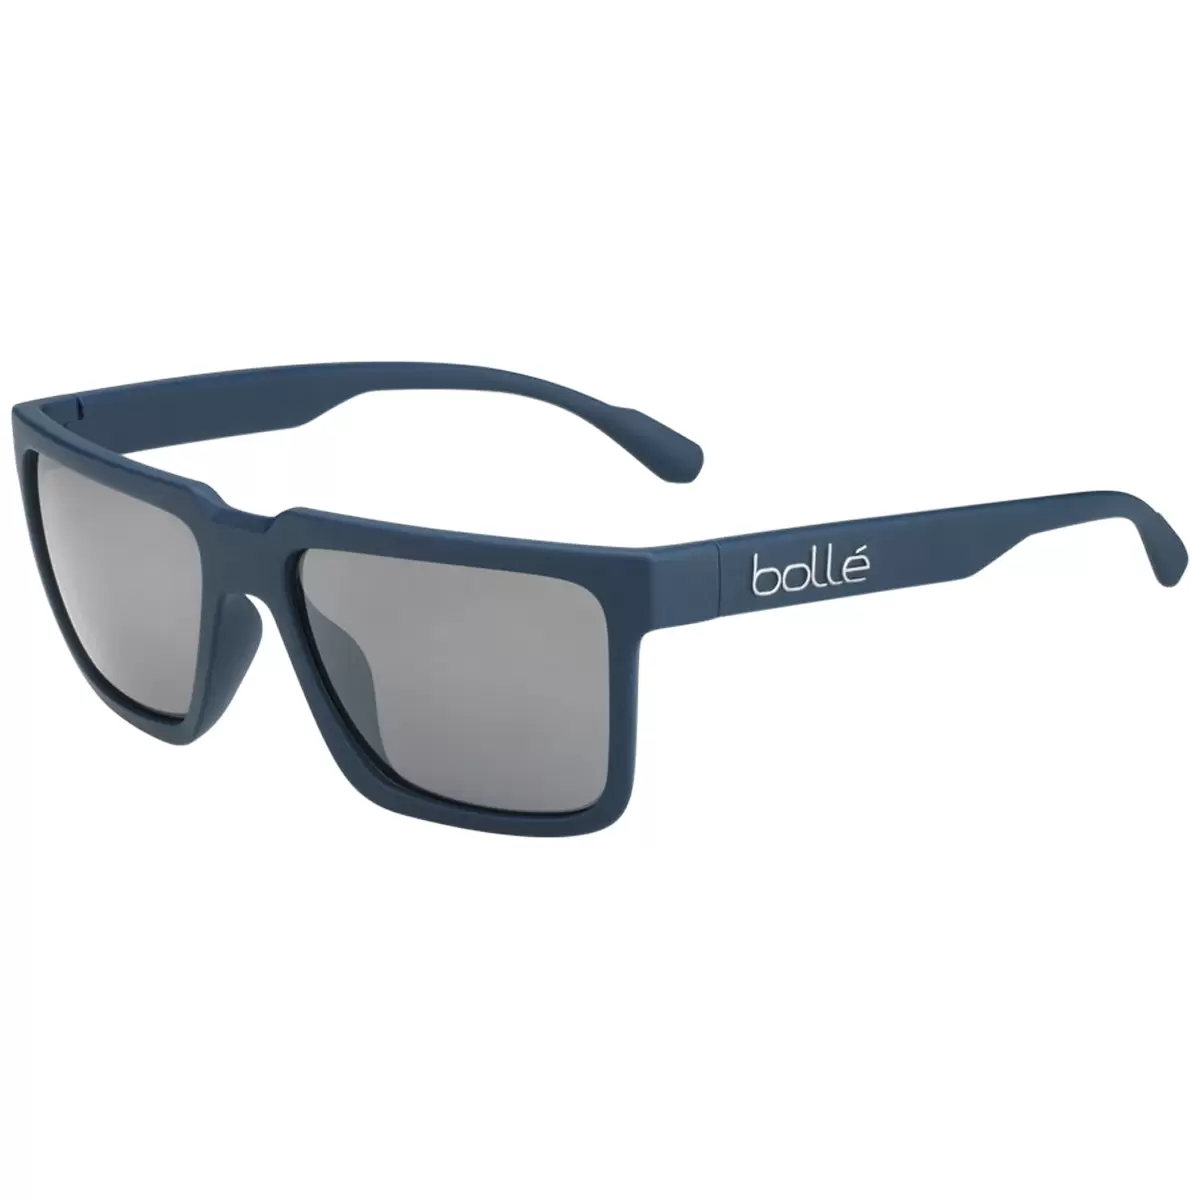 Bollé 12557 Frank Men's Sunglasses